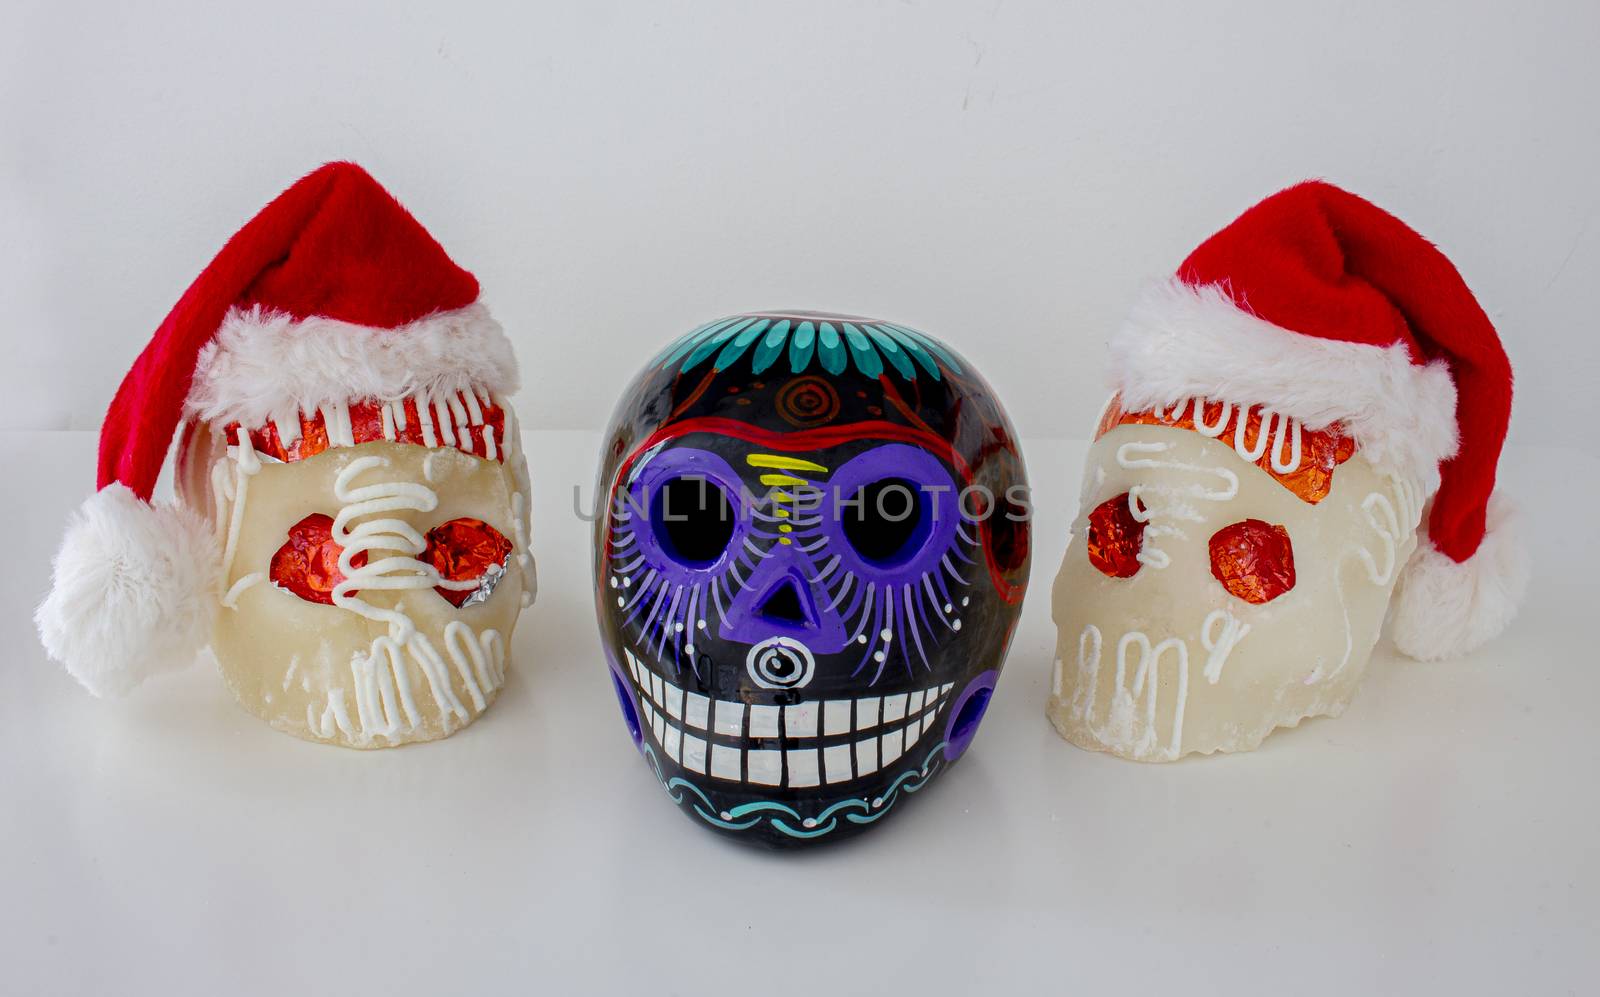 White Traditional Mexican sugar skulls with Santa hats. Mexican Christmas.(calaveritas de azucar para navidad en México) mix cultures. by oasisamuel